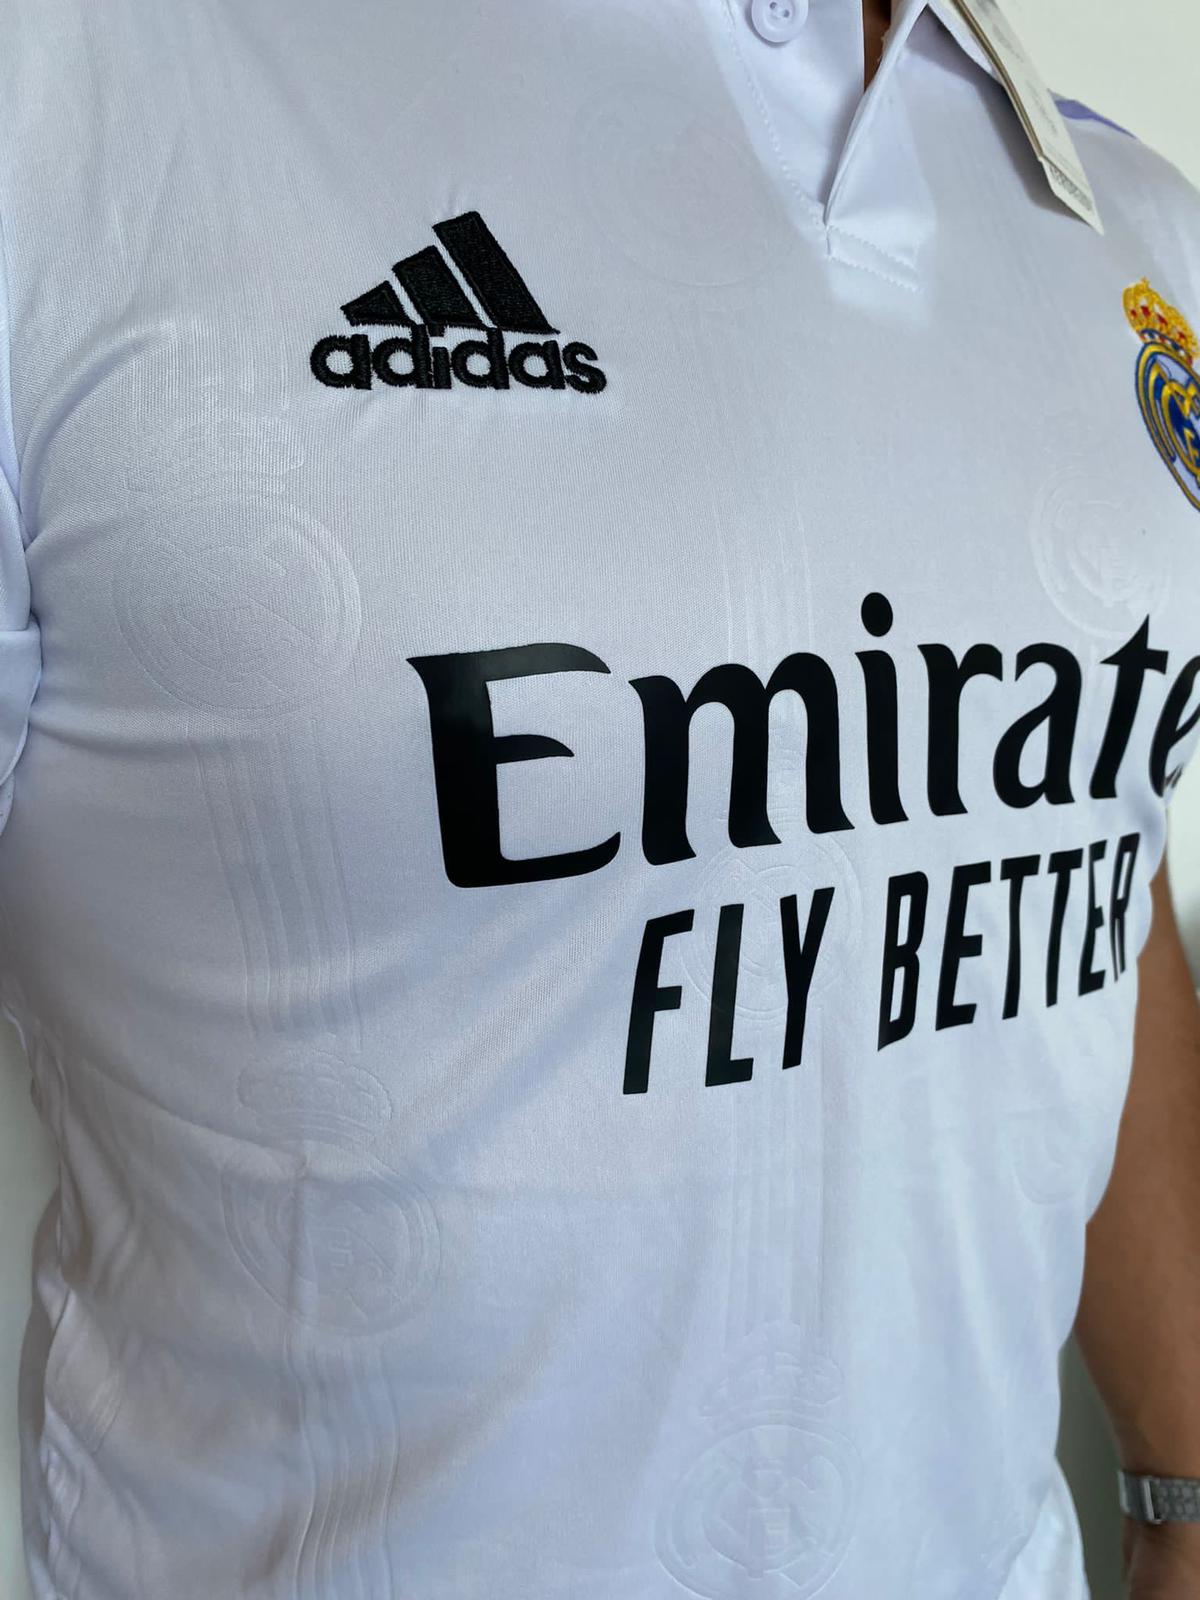 Camiseta de fútbol Real madrid blanca